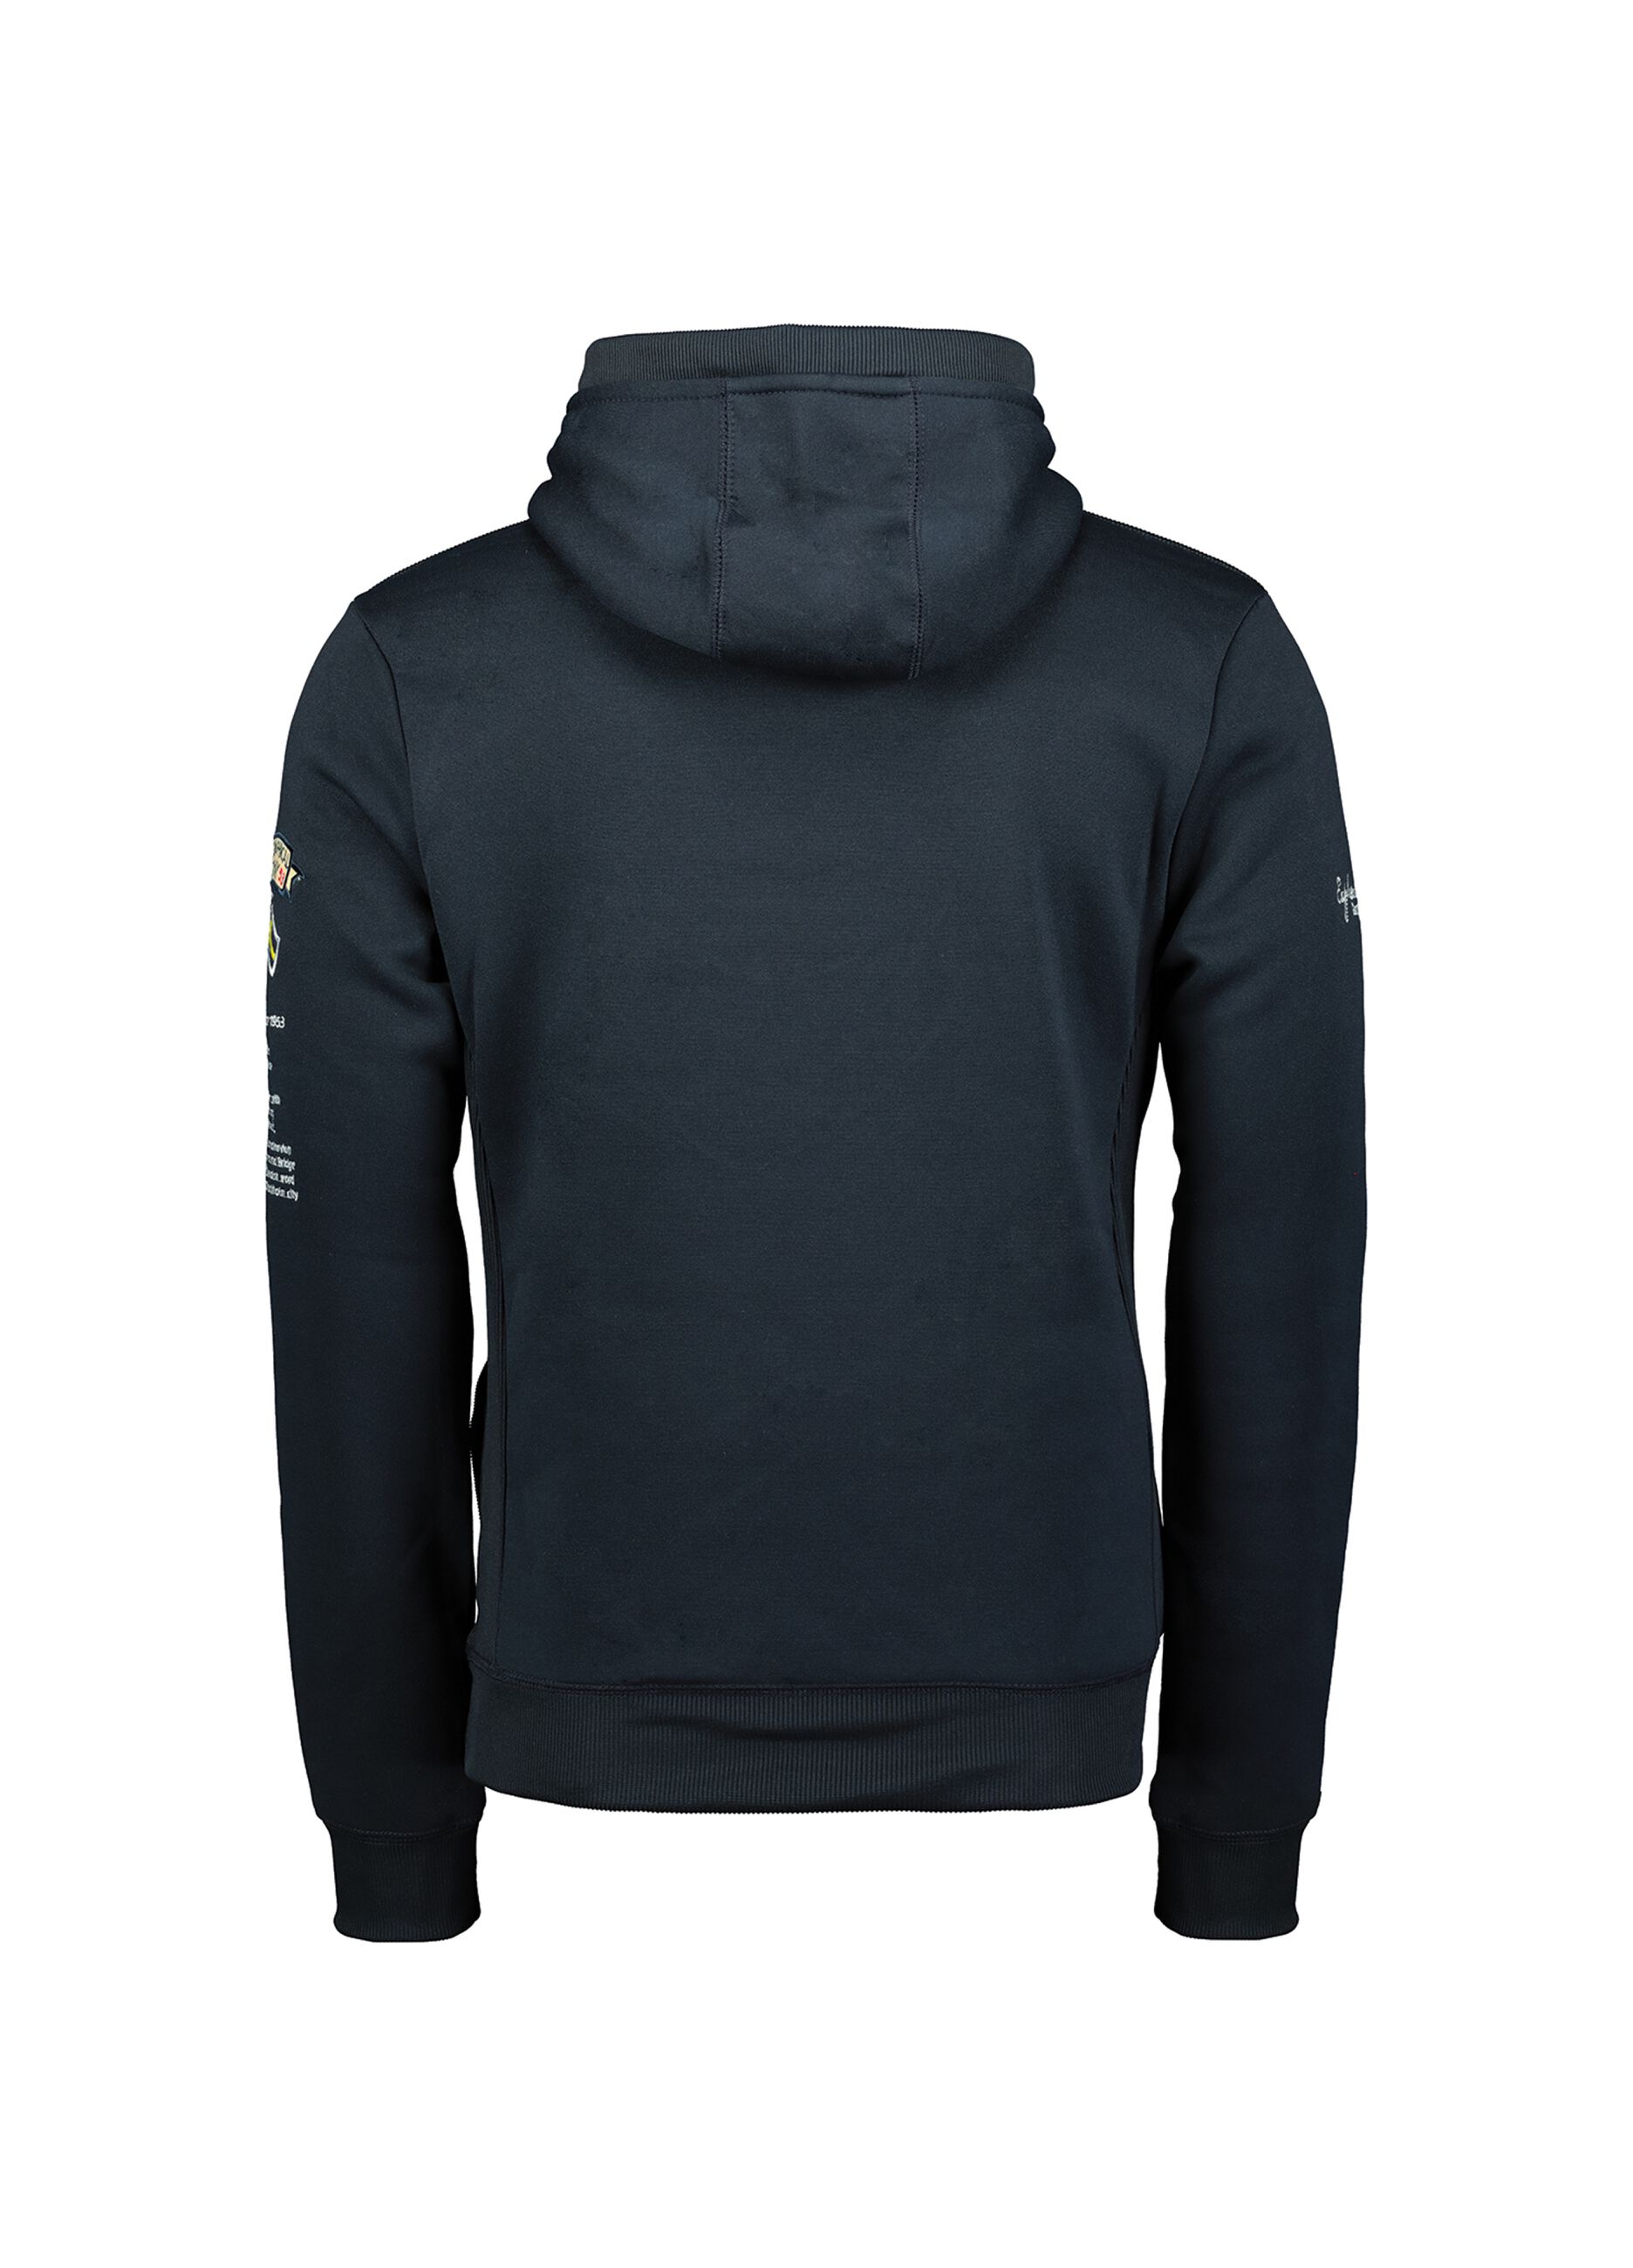 Geographical Norway half-zip sweatshirt with hood